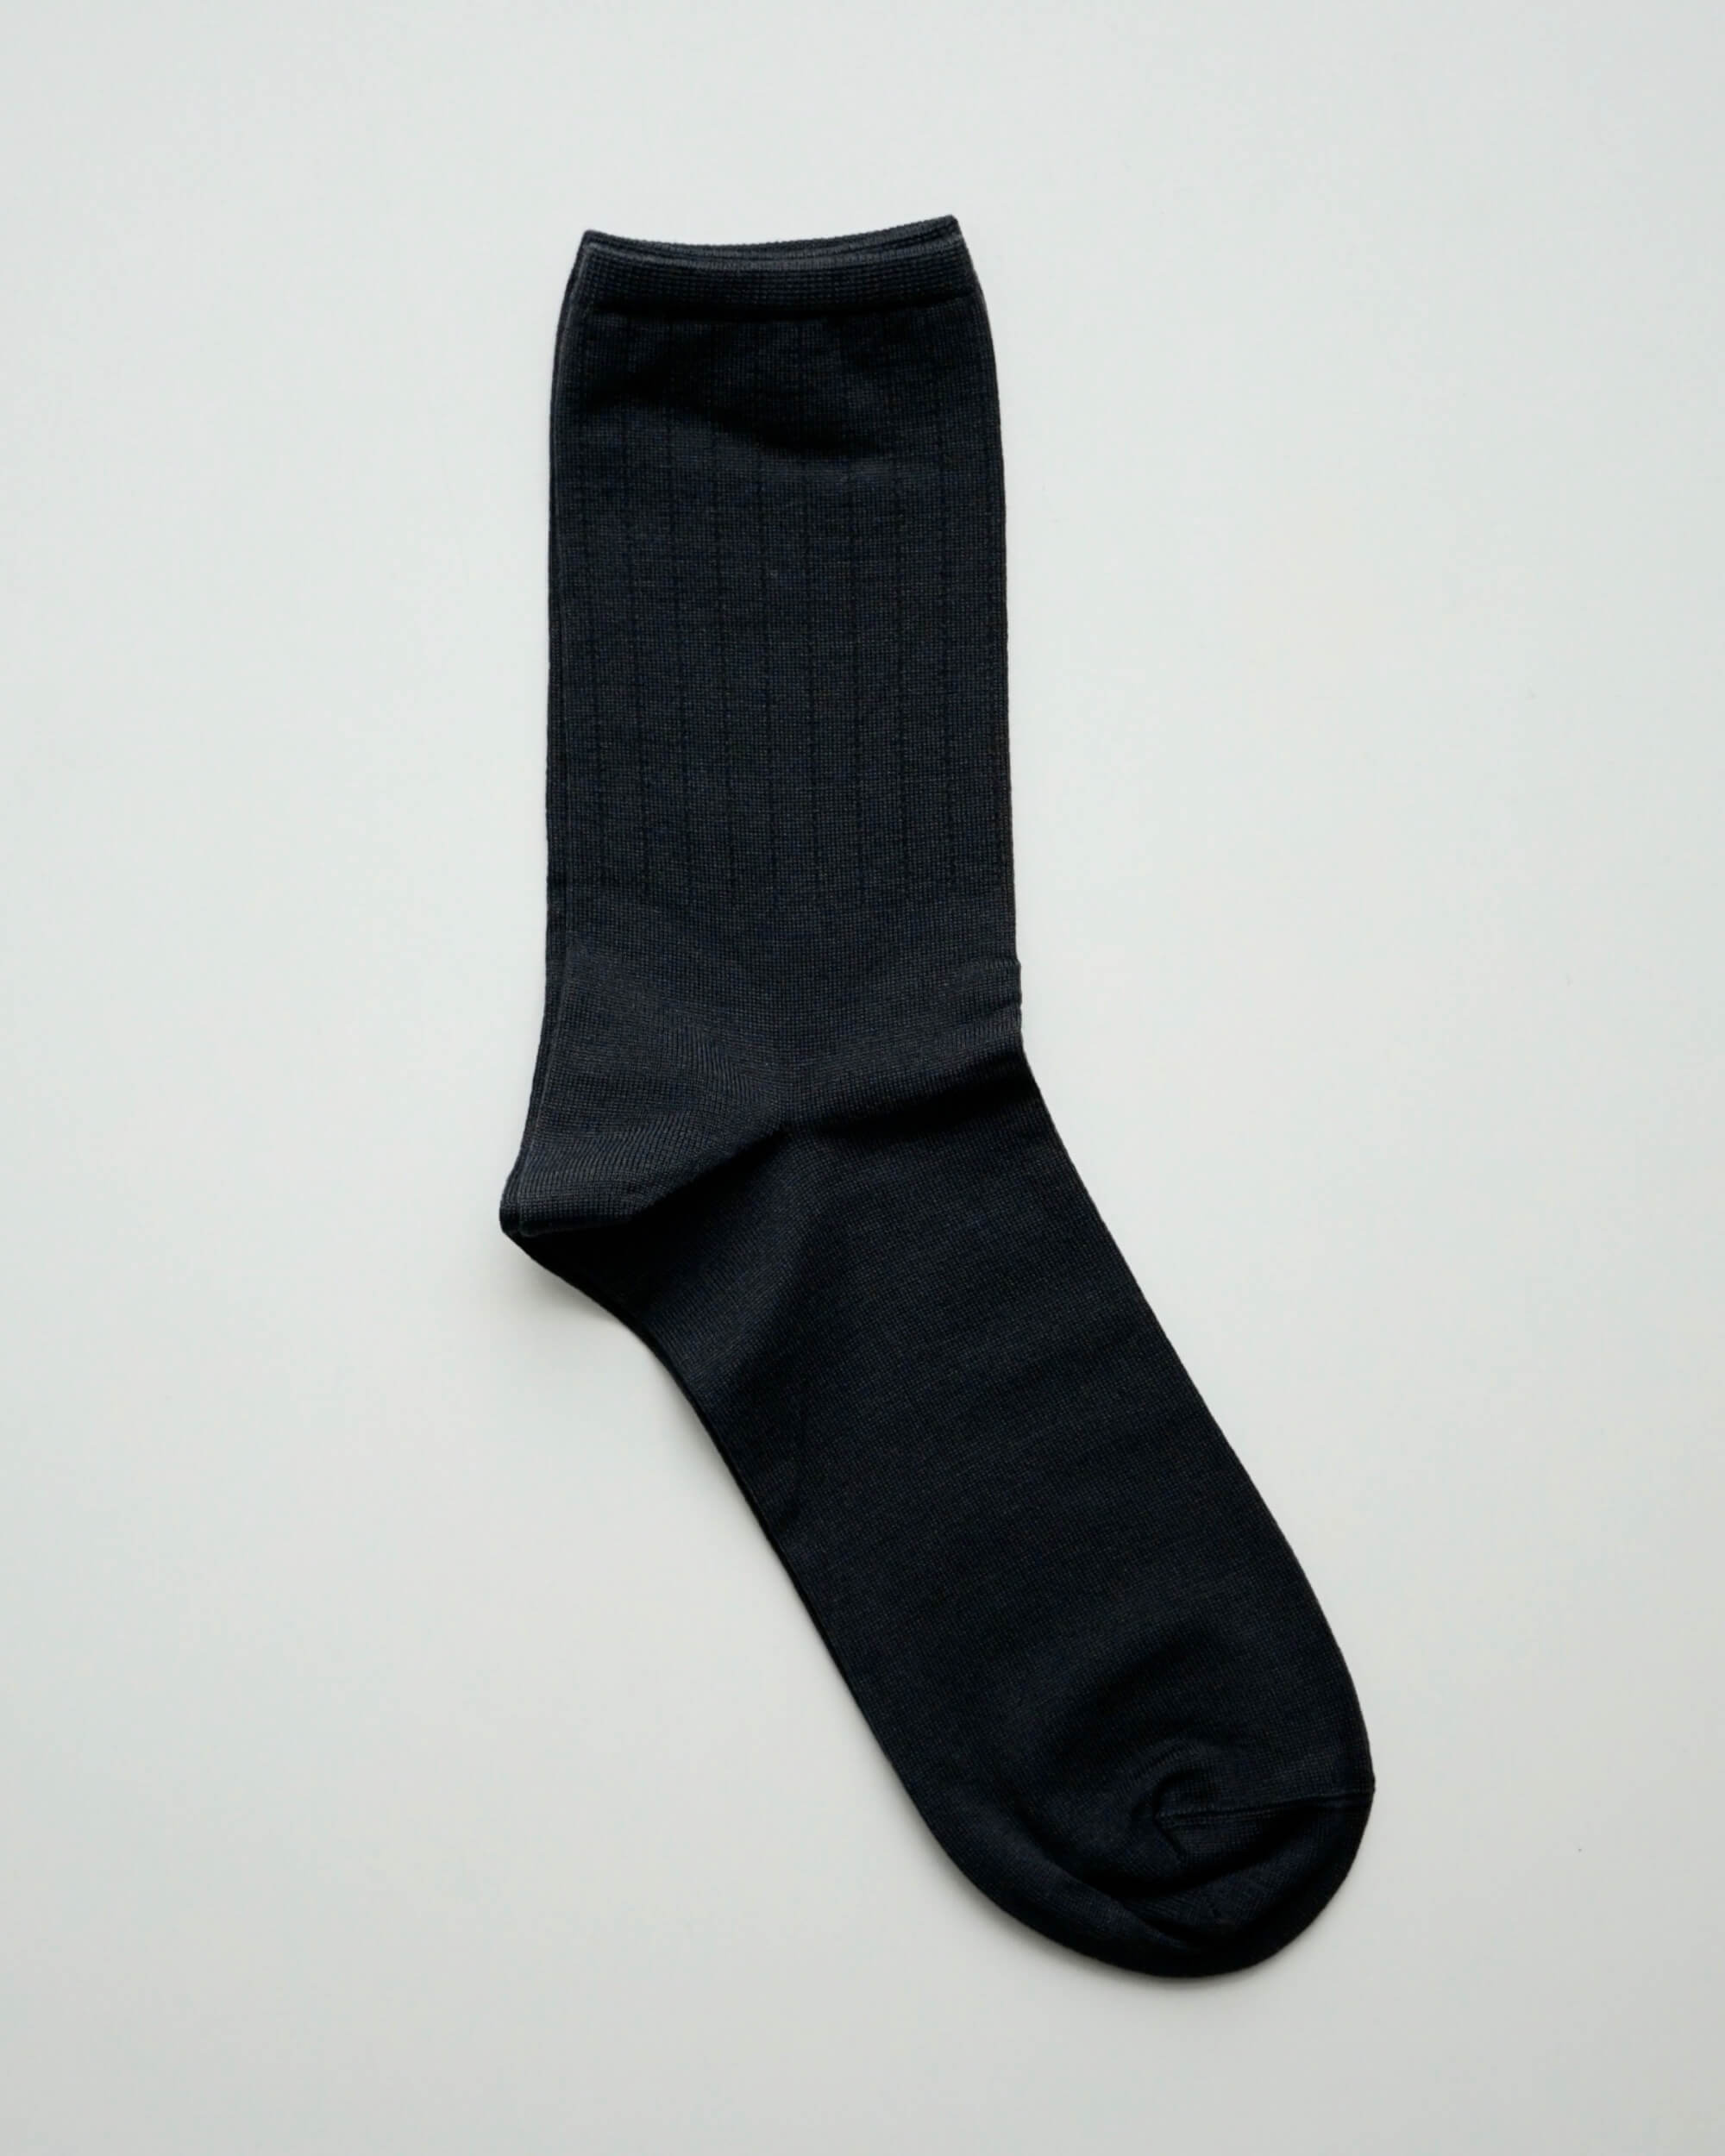 japanese made silk socks at the maker hobart